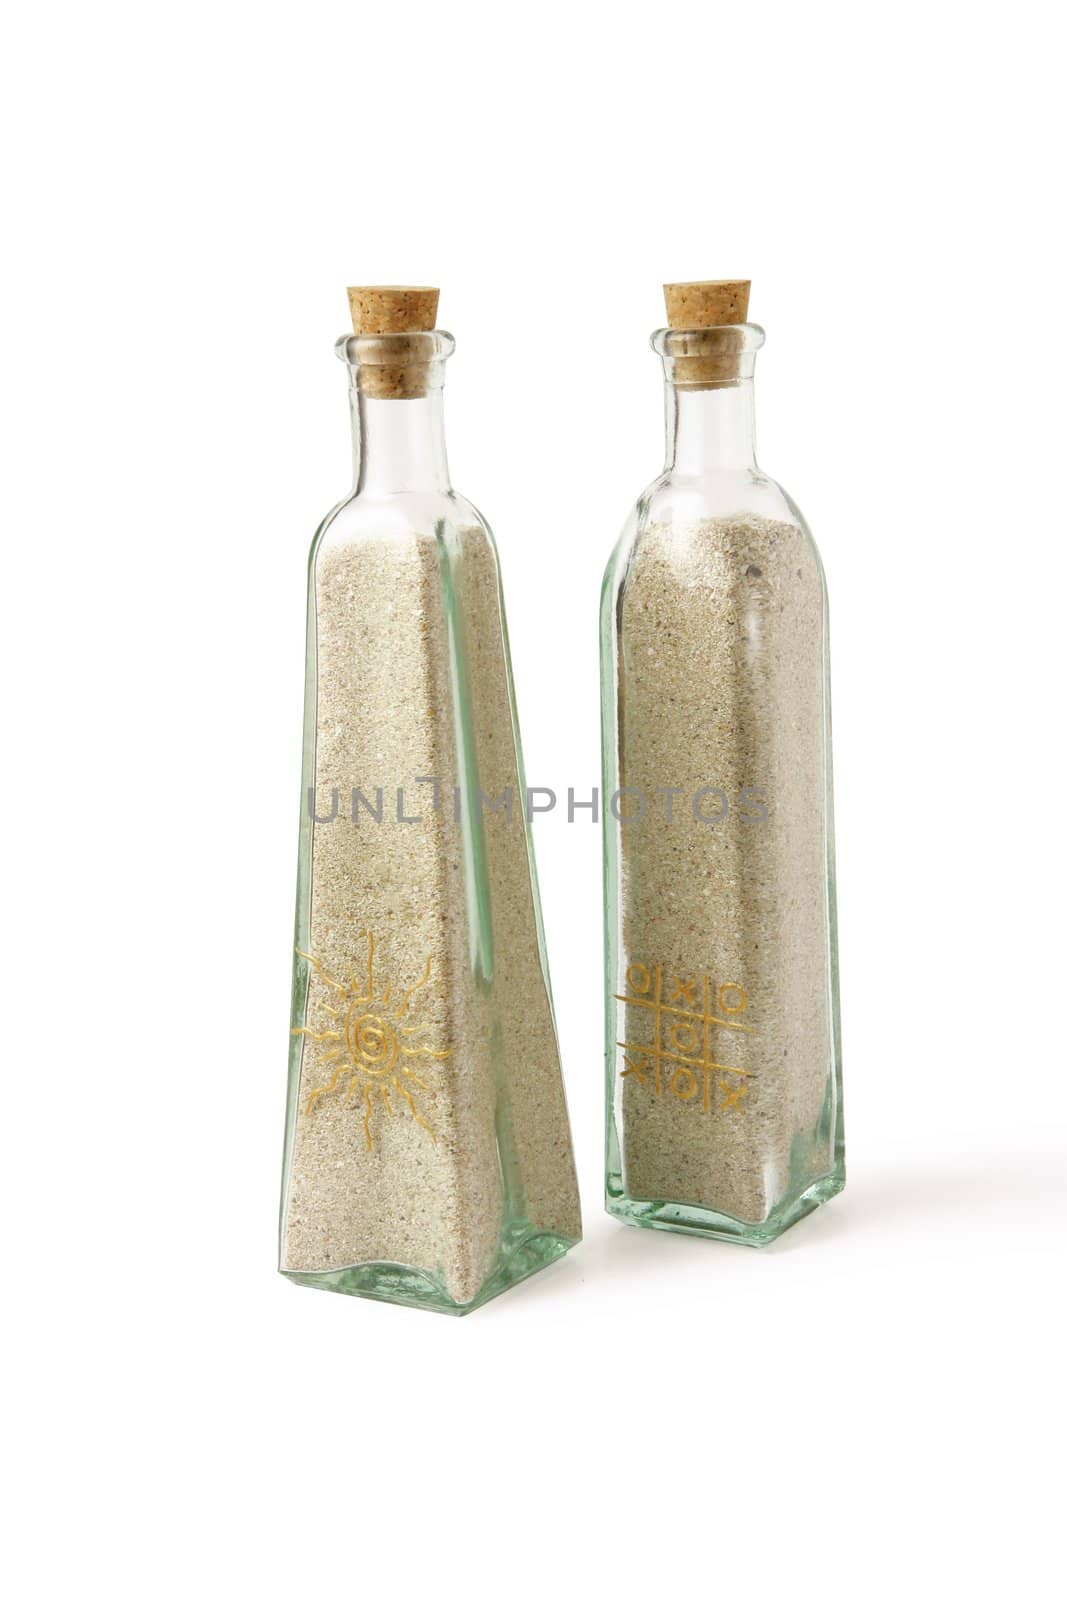 Two glass bottles full of sand by phovoir